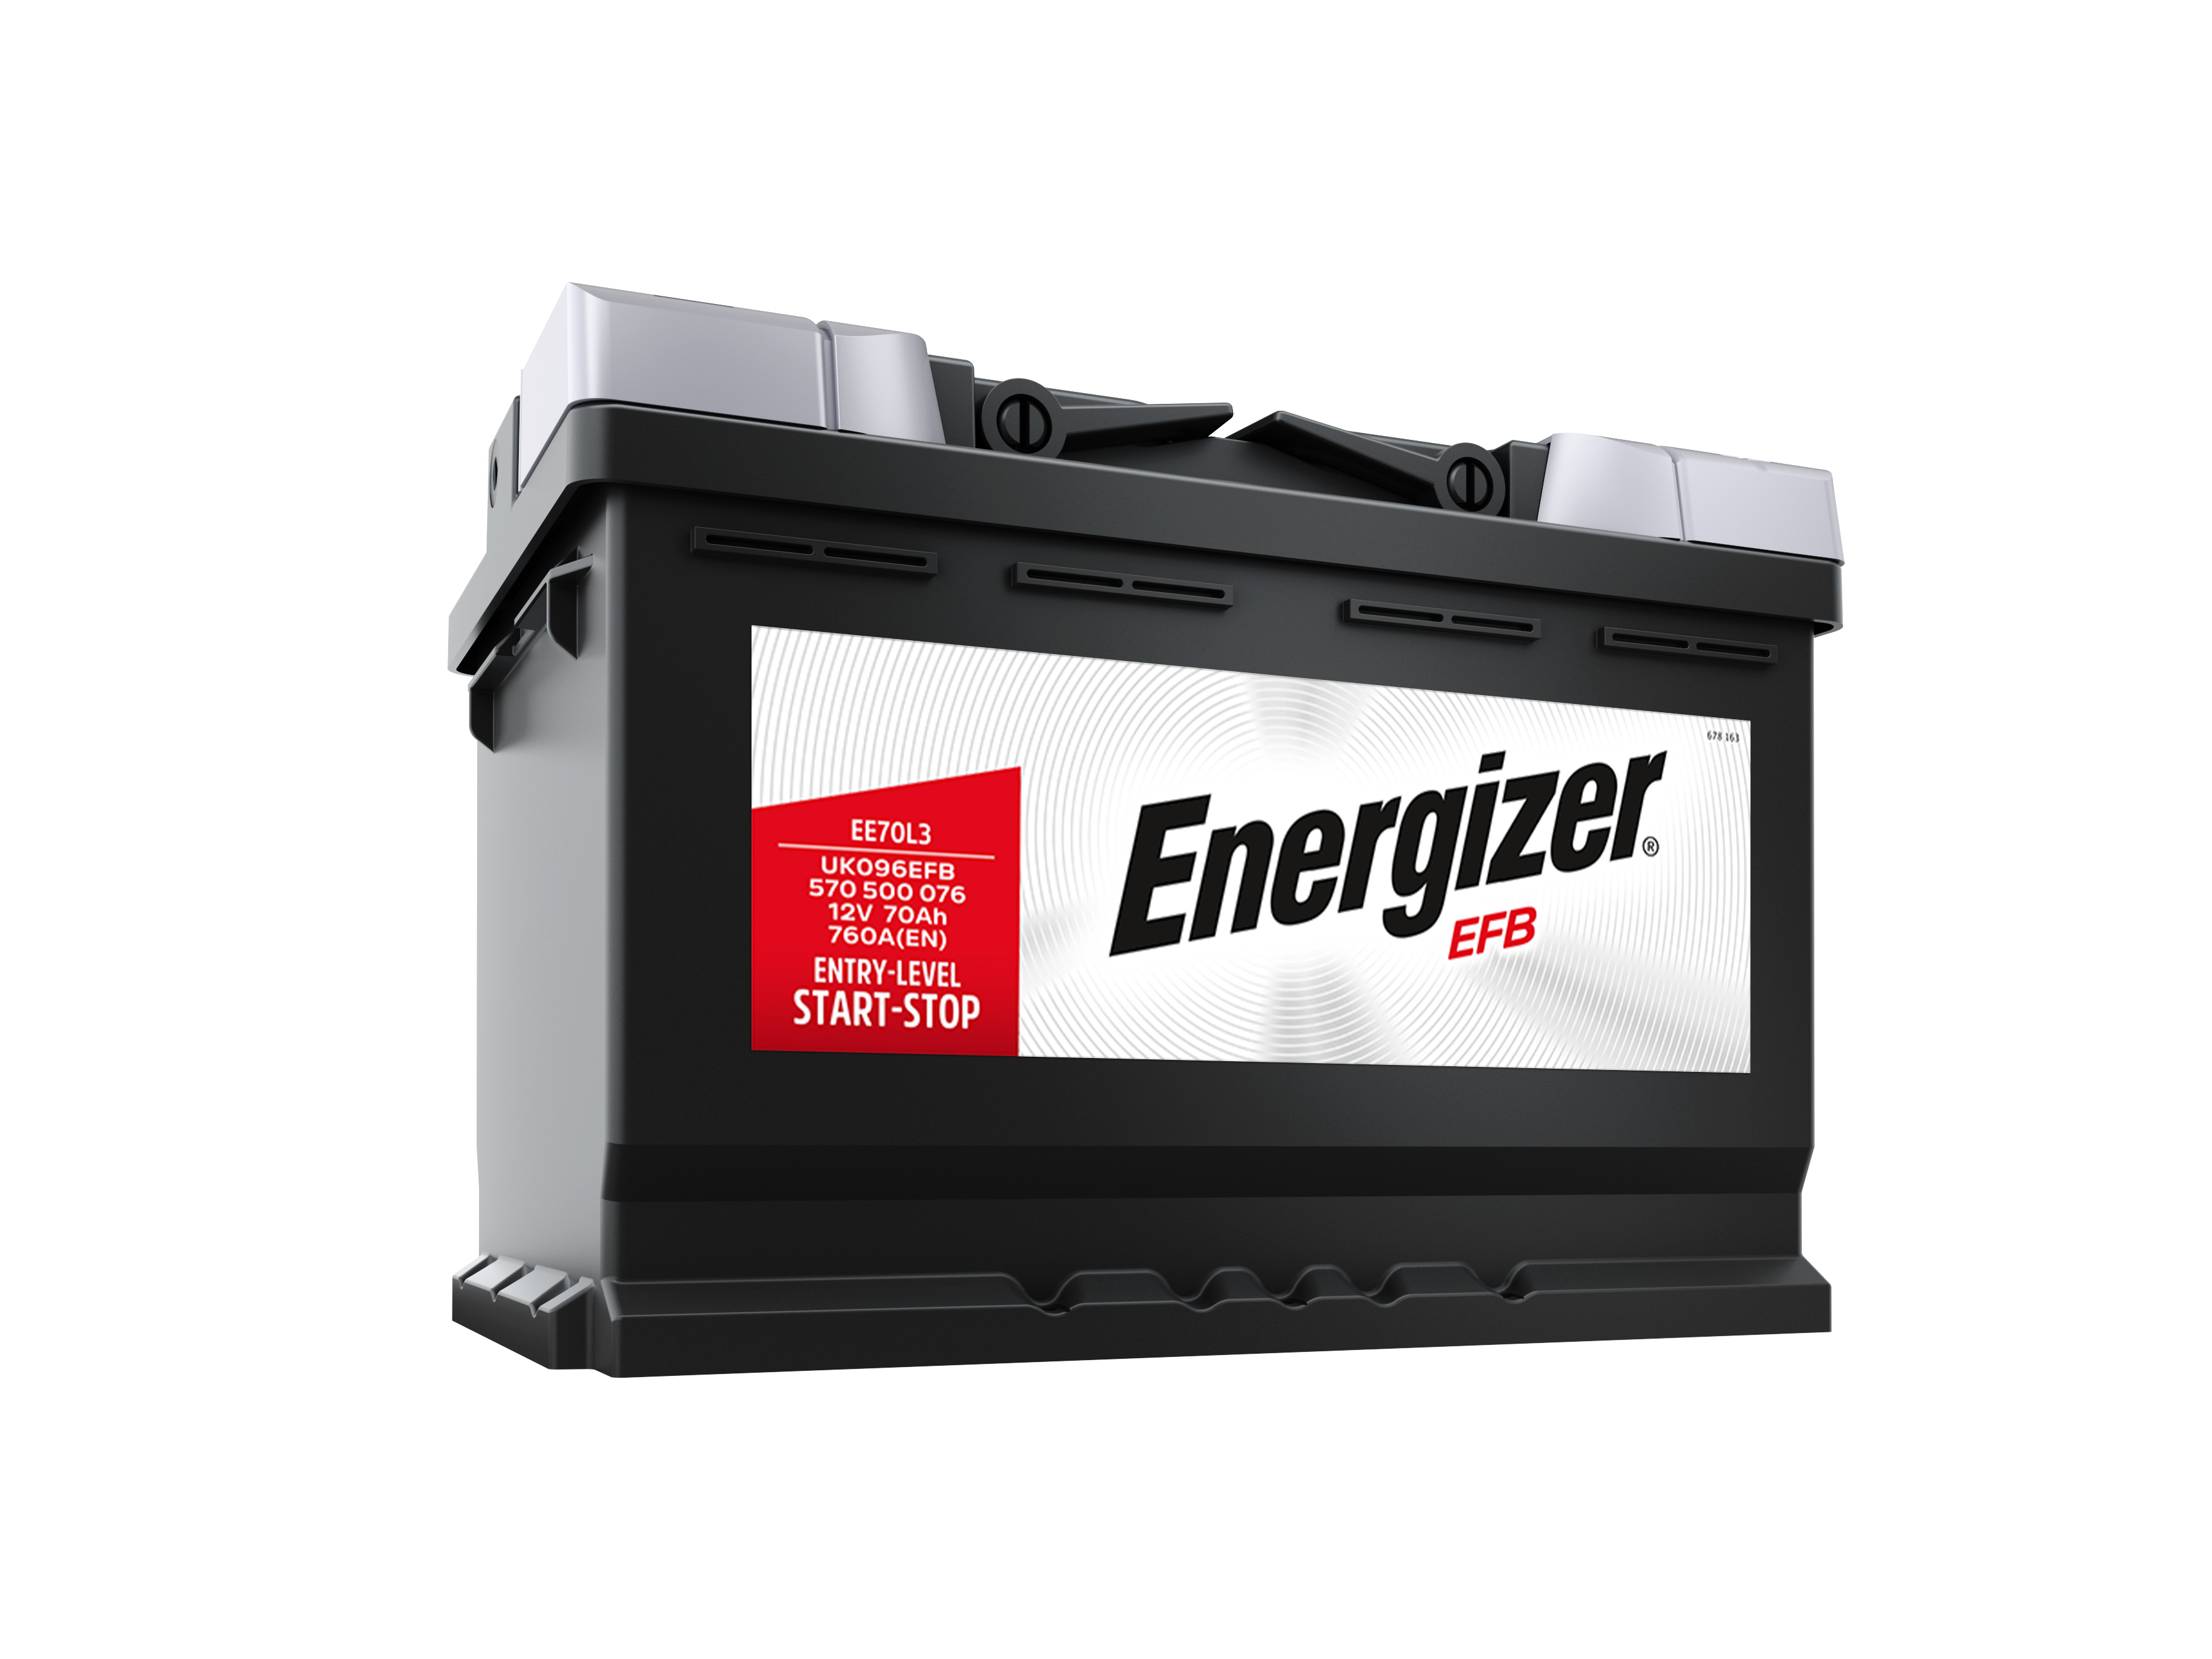 https://www.energizerautomotivebatteries.com/fileadmin/images/products/570500076_h6_energizer_efb.jpg